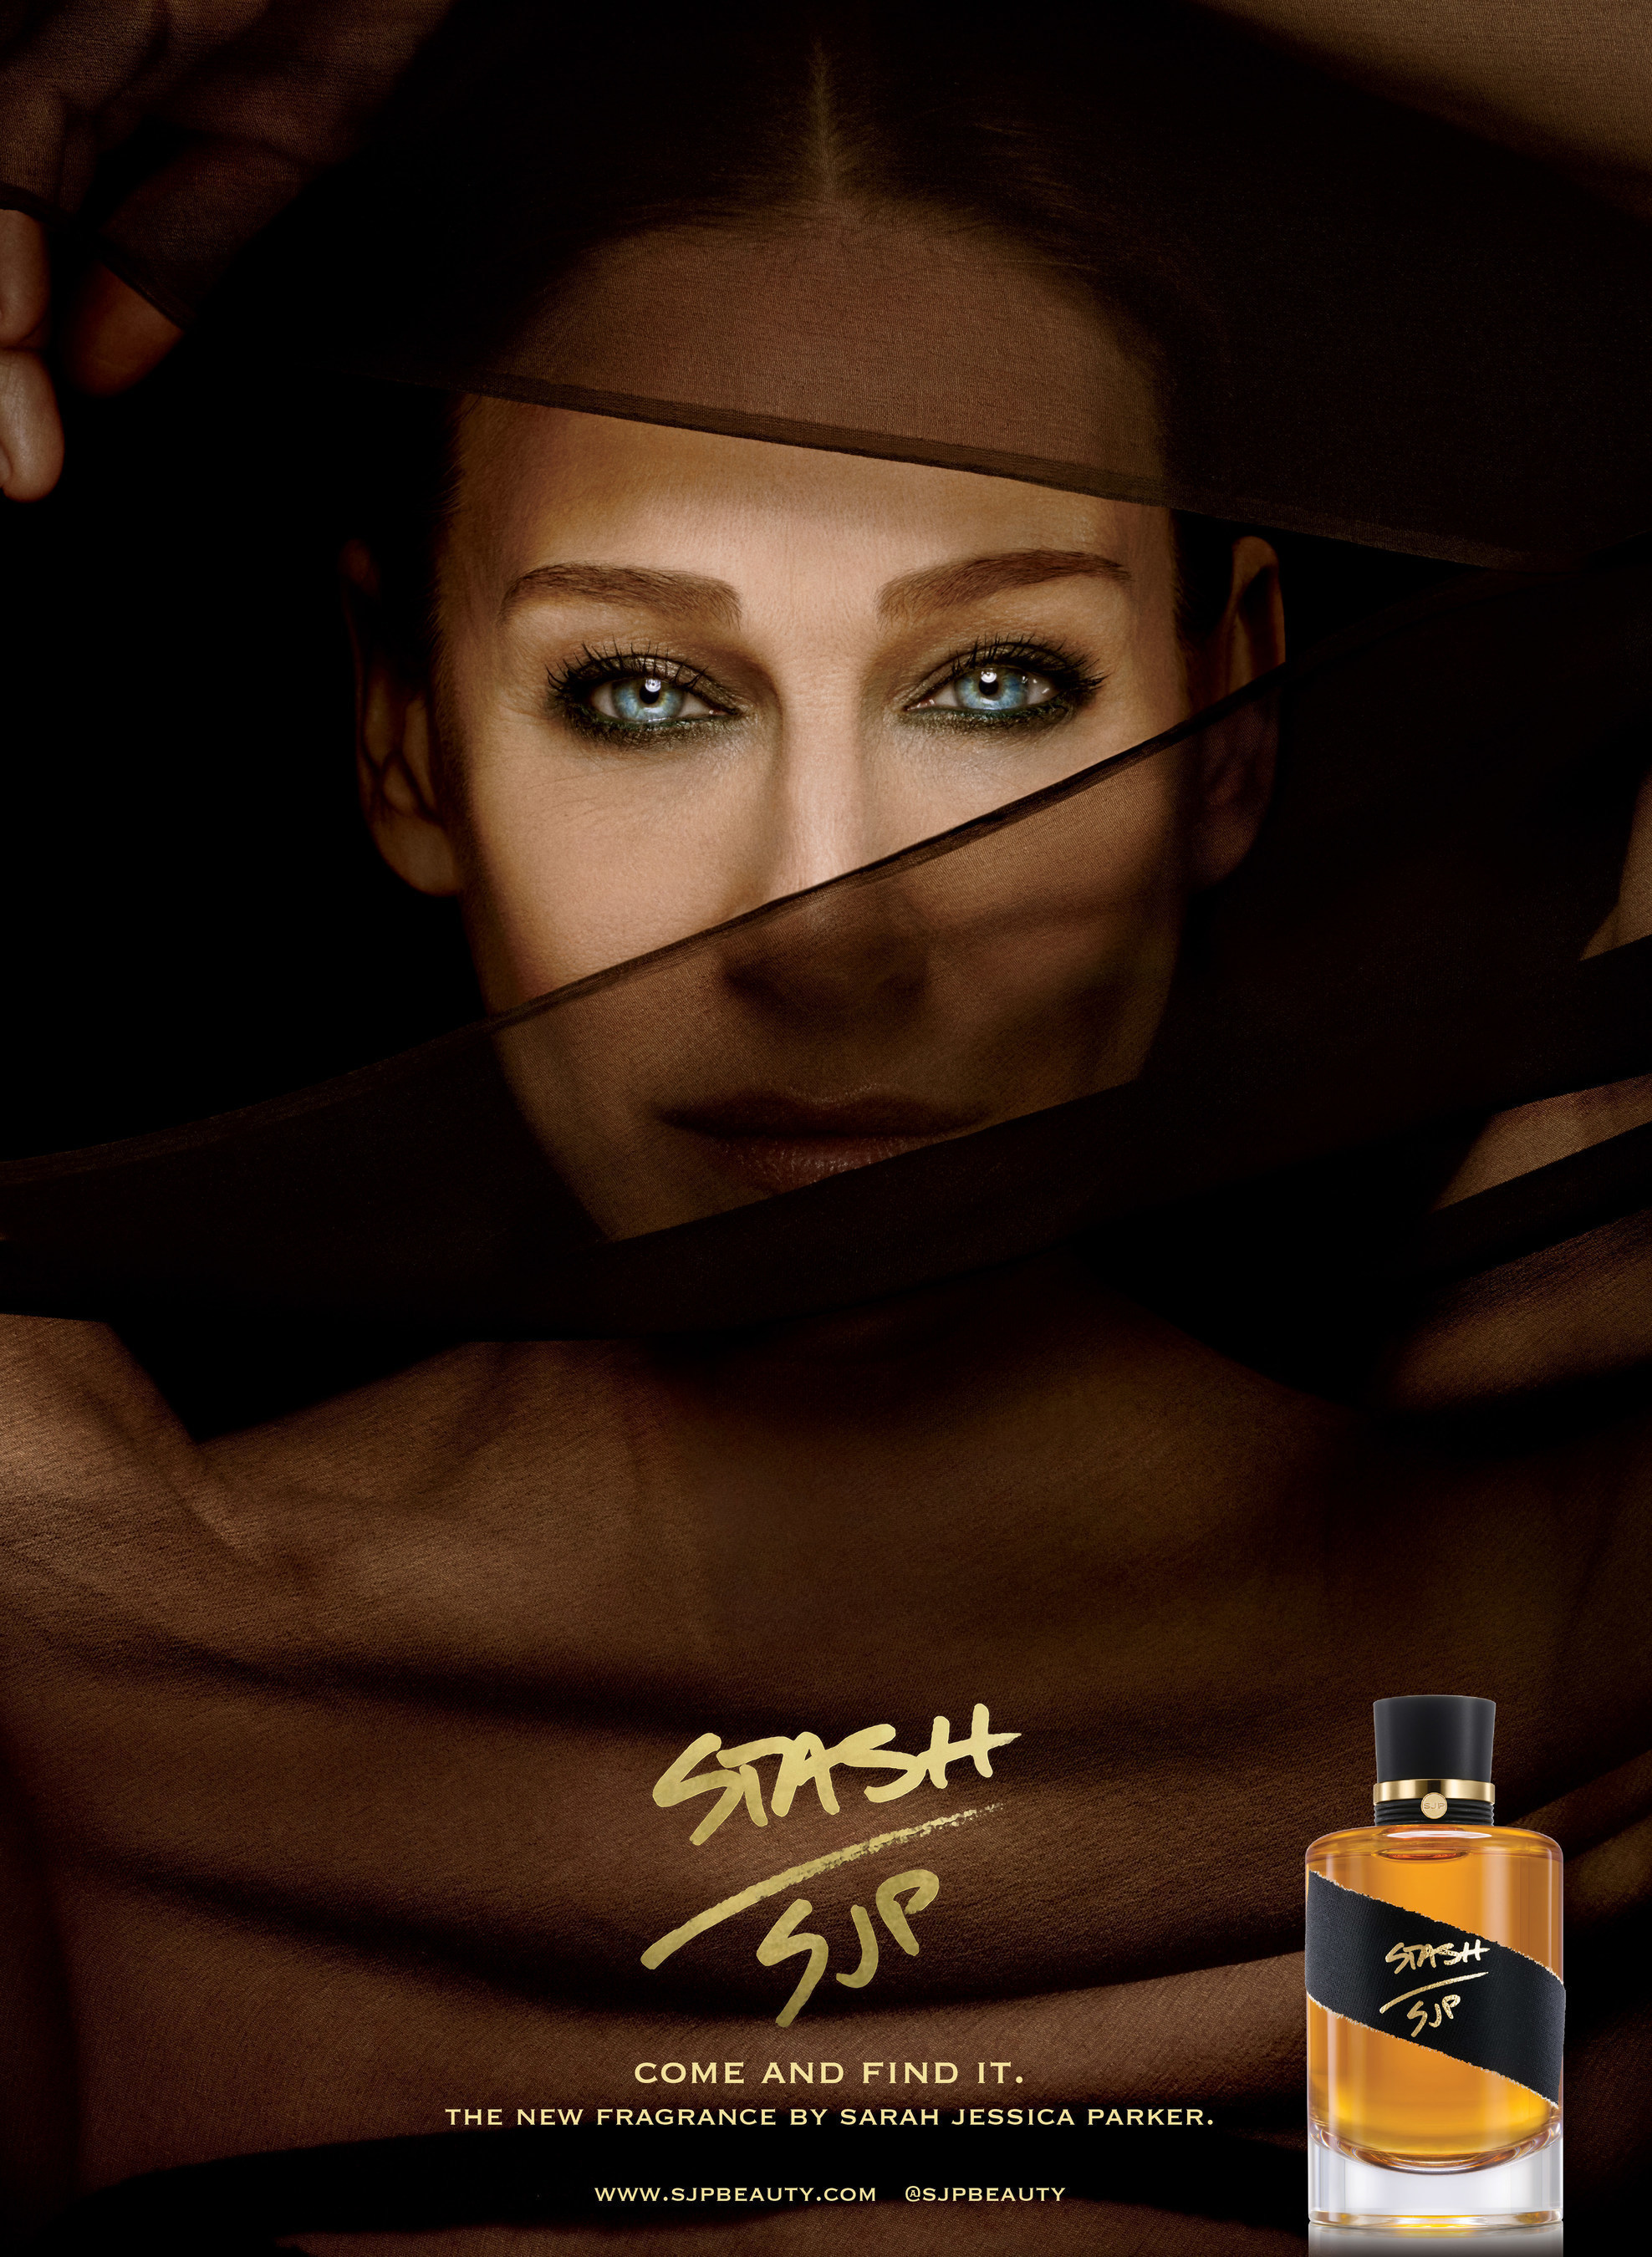 Sarah Jessica Parker STASH SJP Campaign Ad